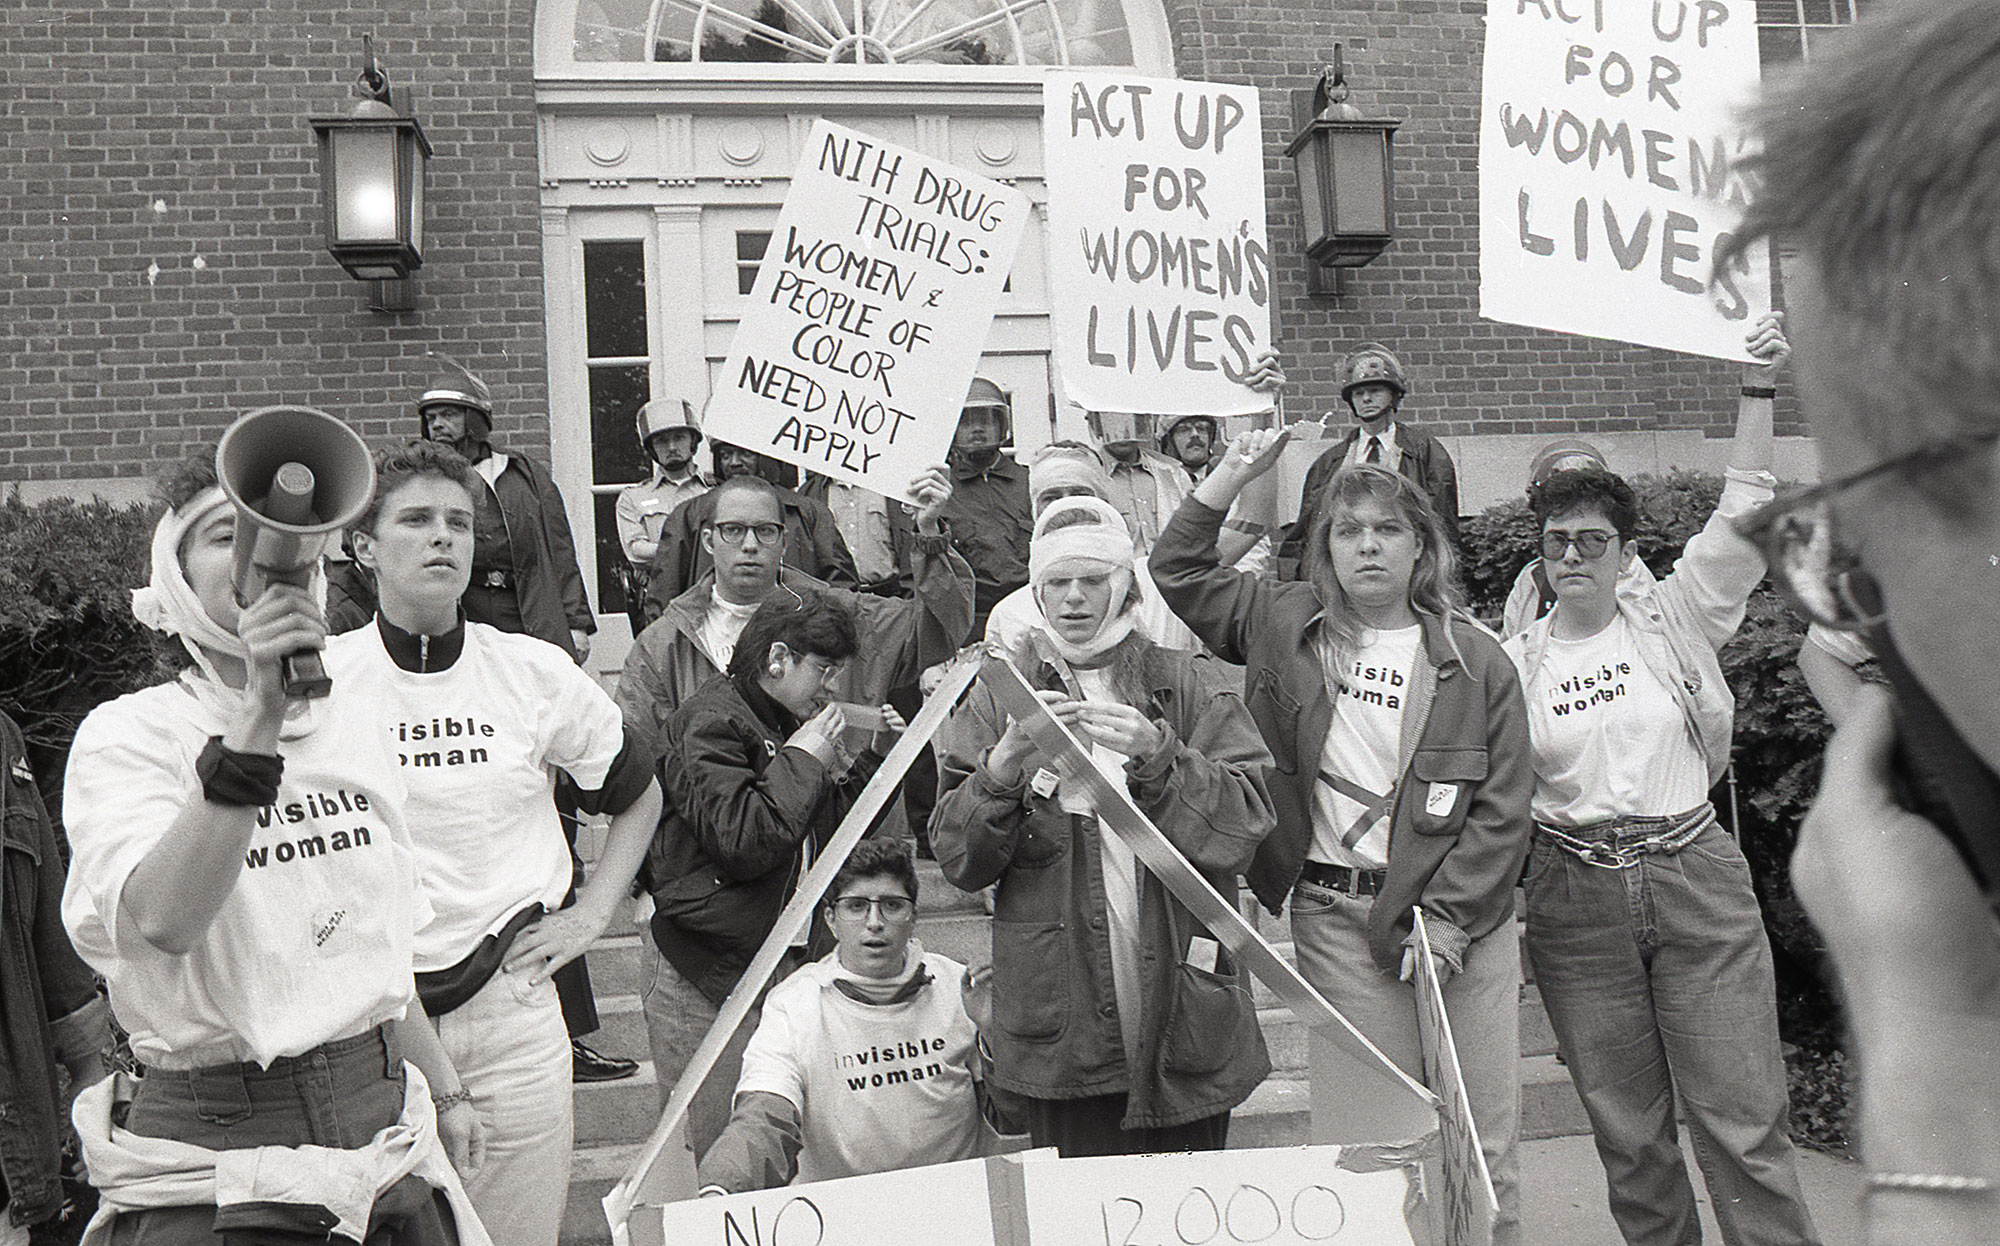 Donna Binder, Women of ACT-UP demonstrate at NIH, 1990<br />© Donna Binder”>
		</div>
		<div class=